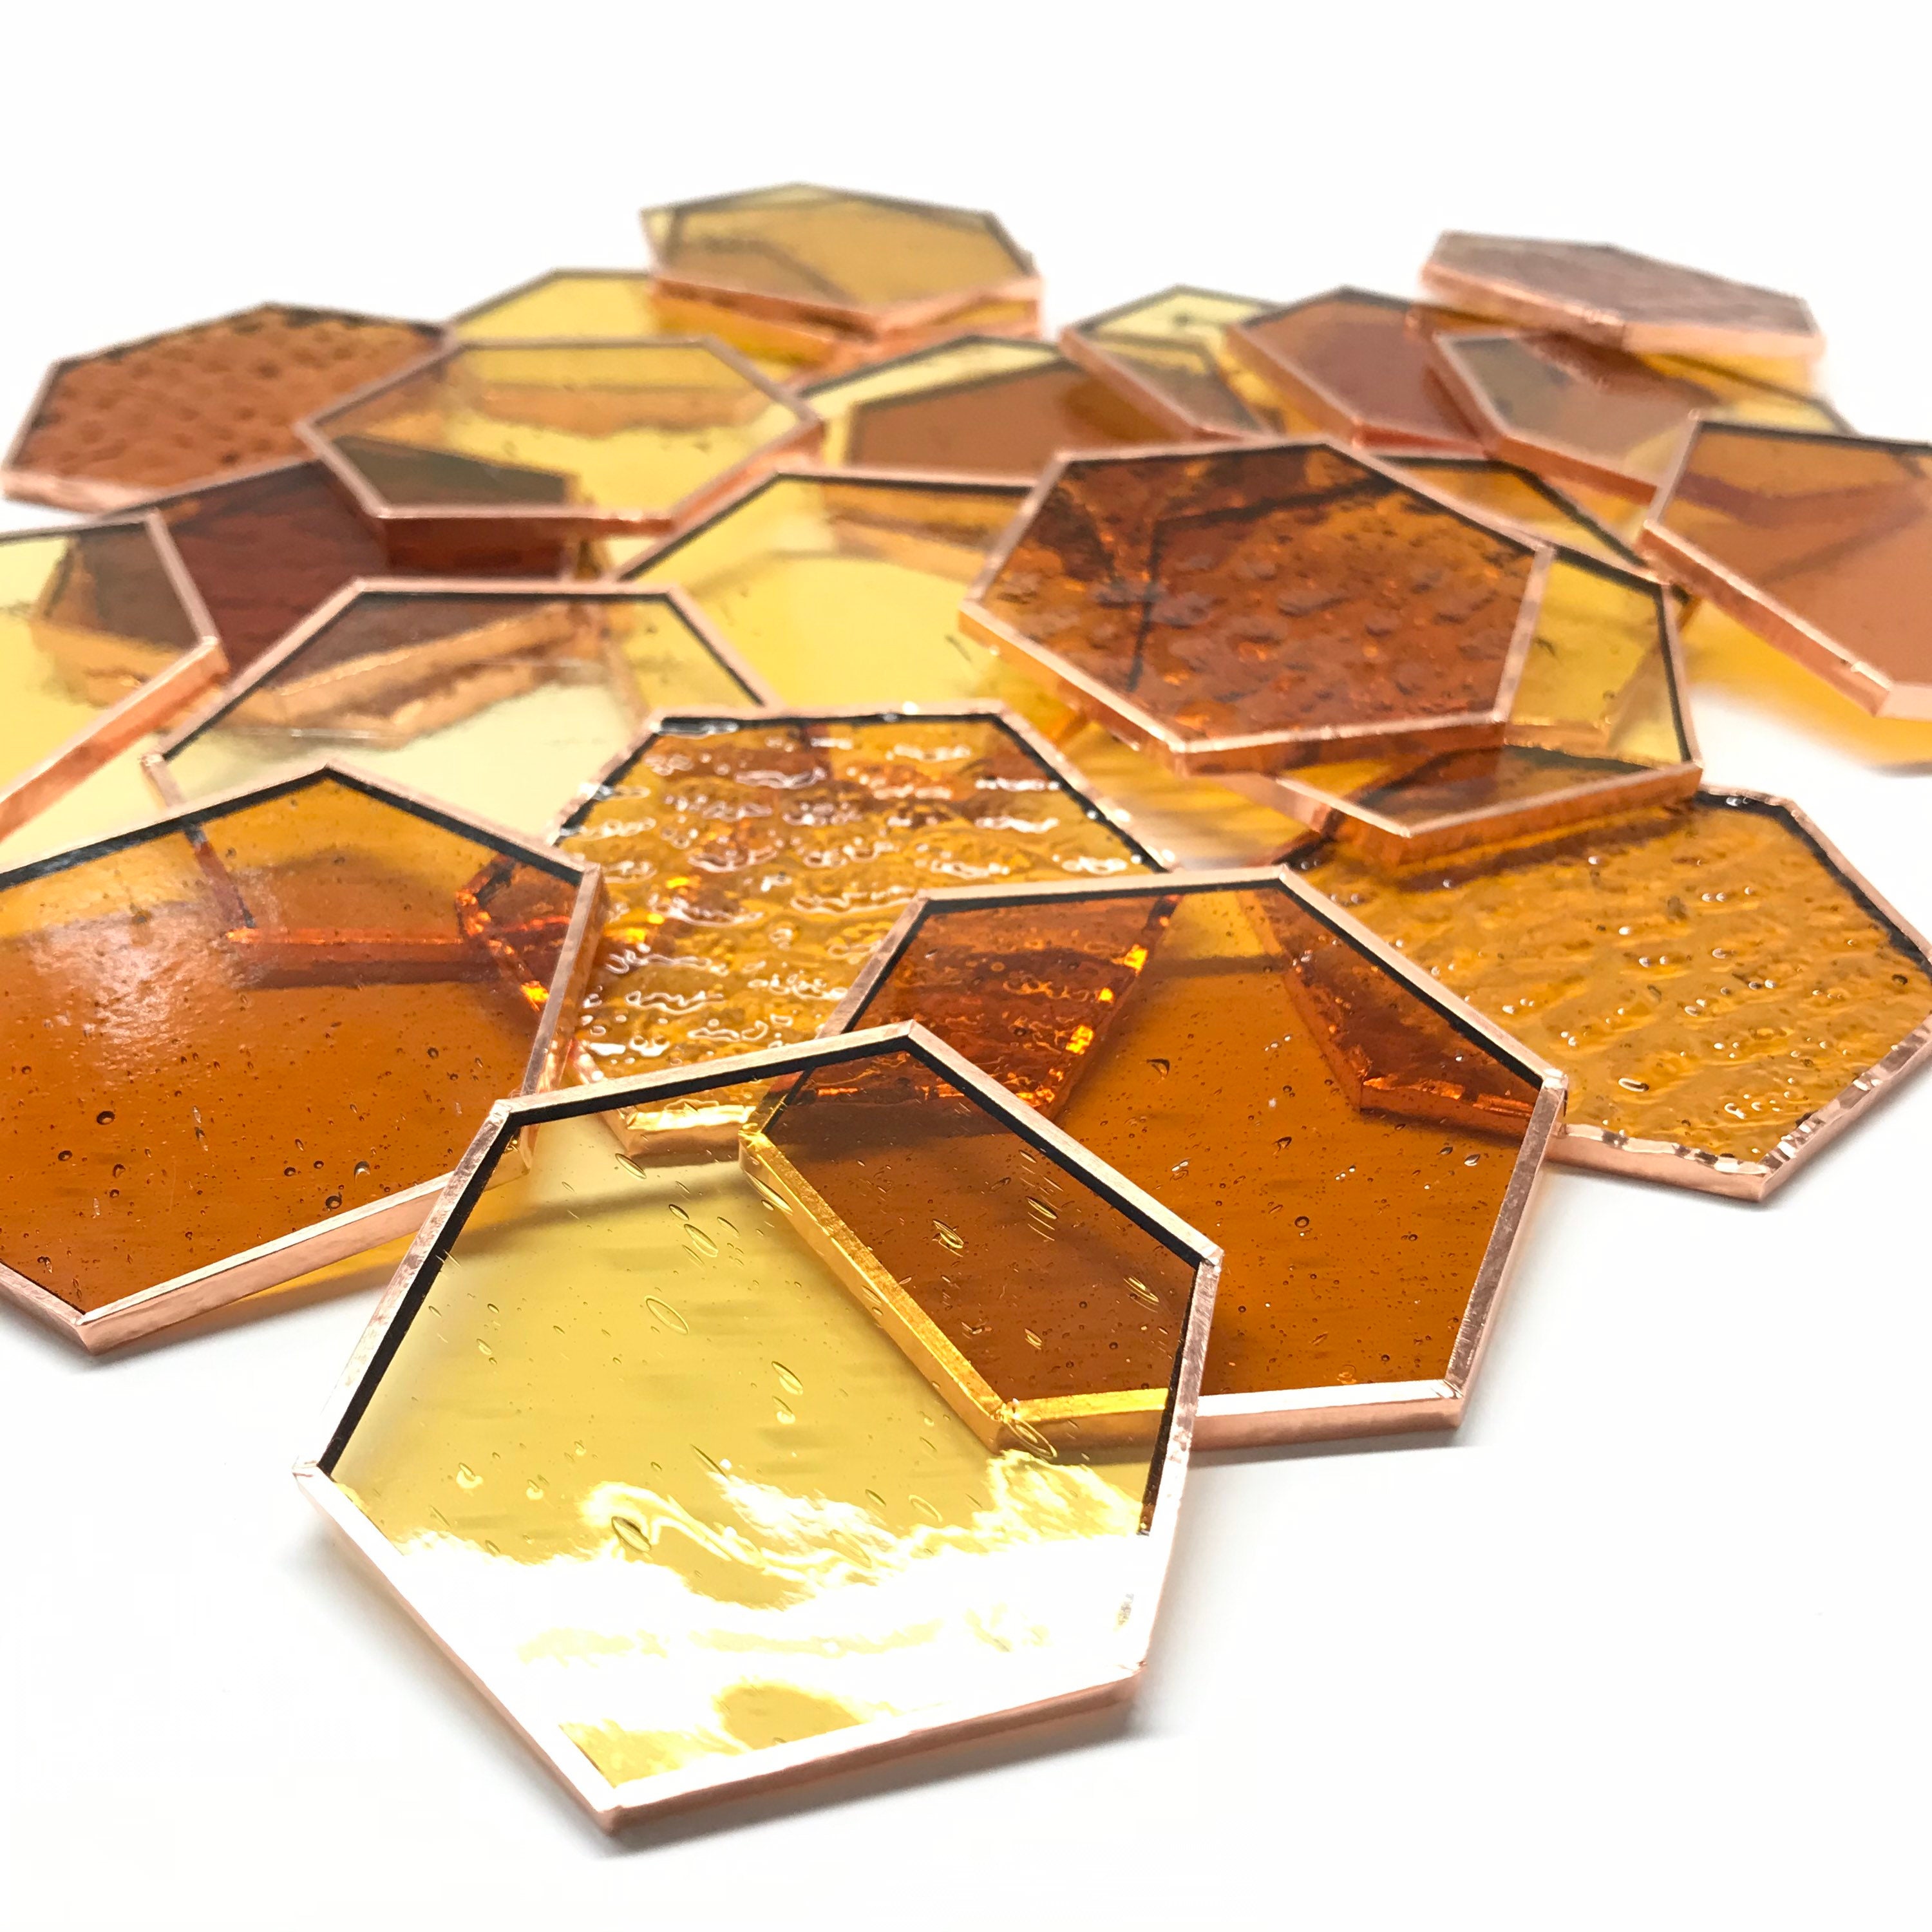 Honeycomb Gold Foil Print Honeycomb Art Print Honeycomb Decor Gold